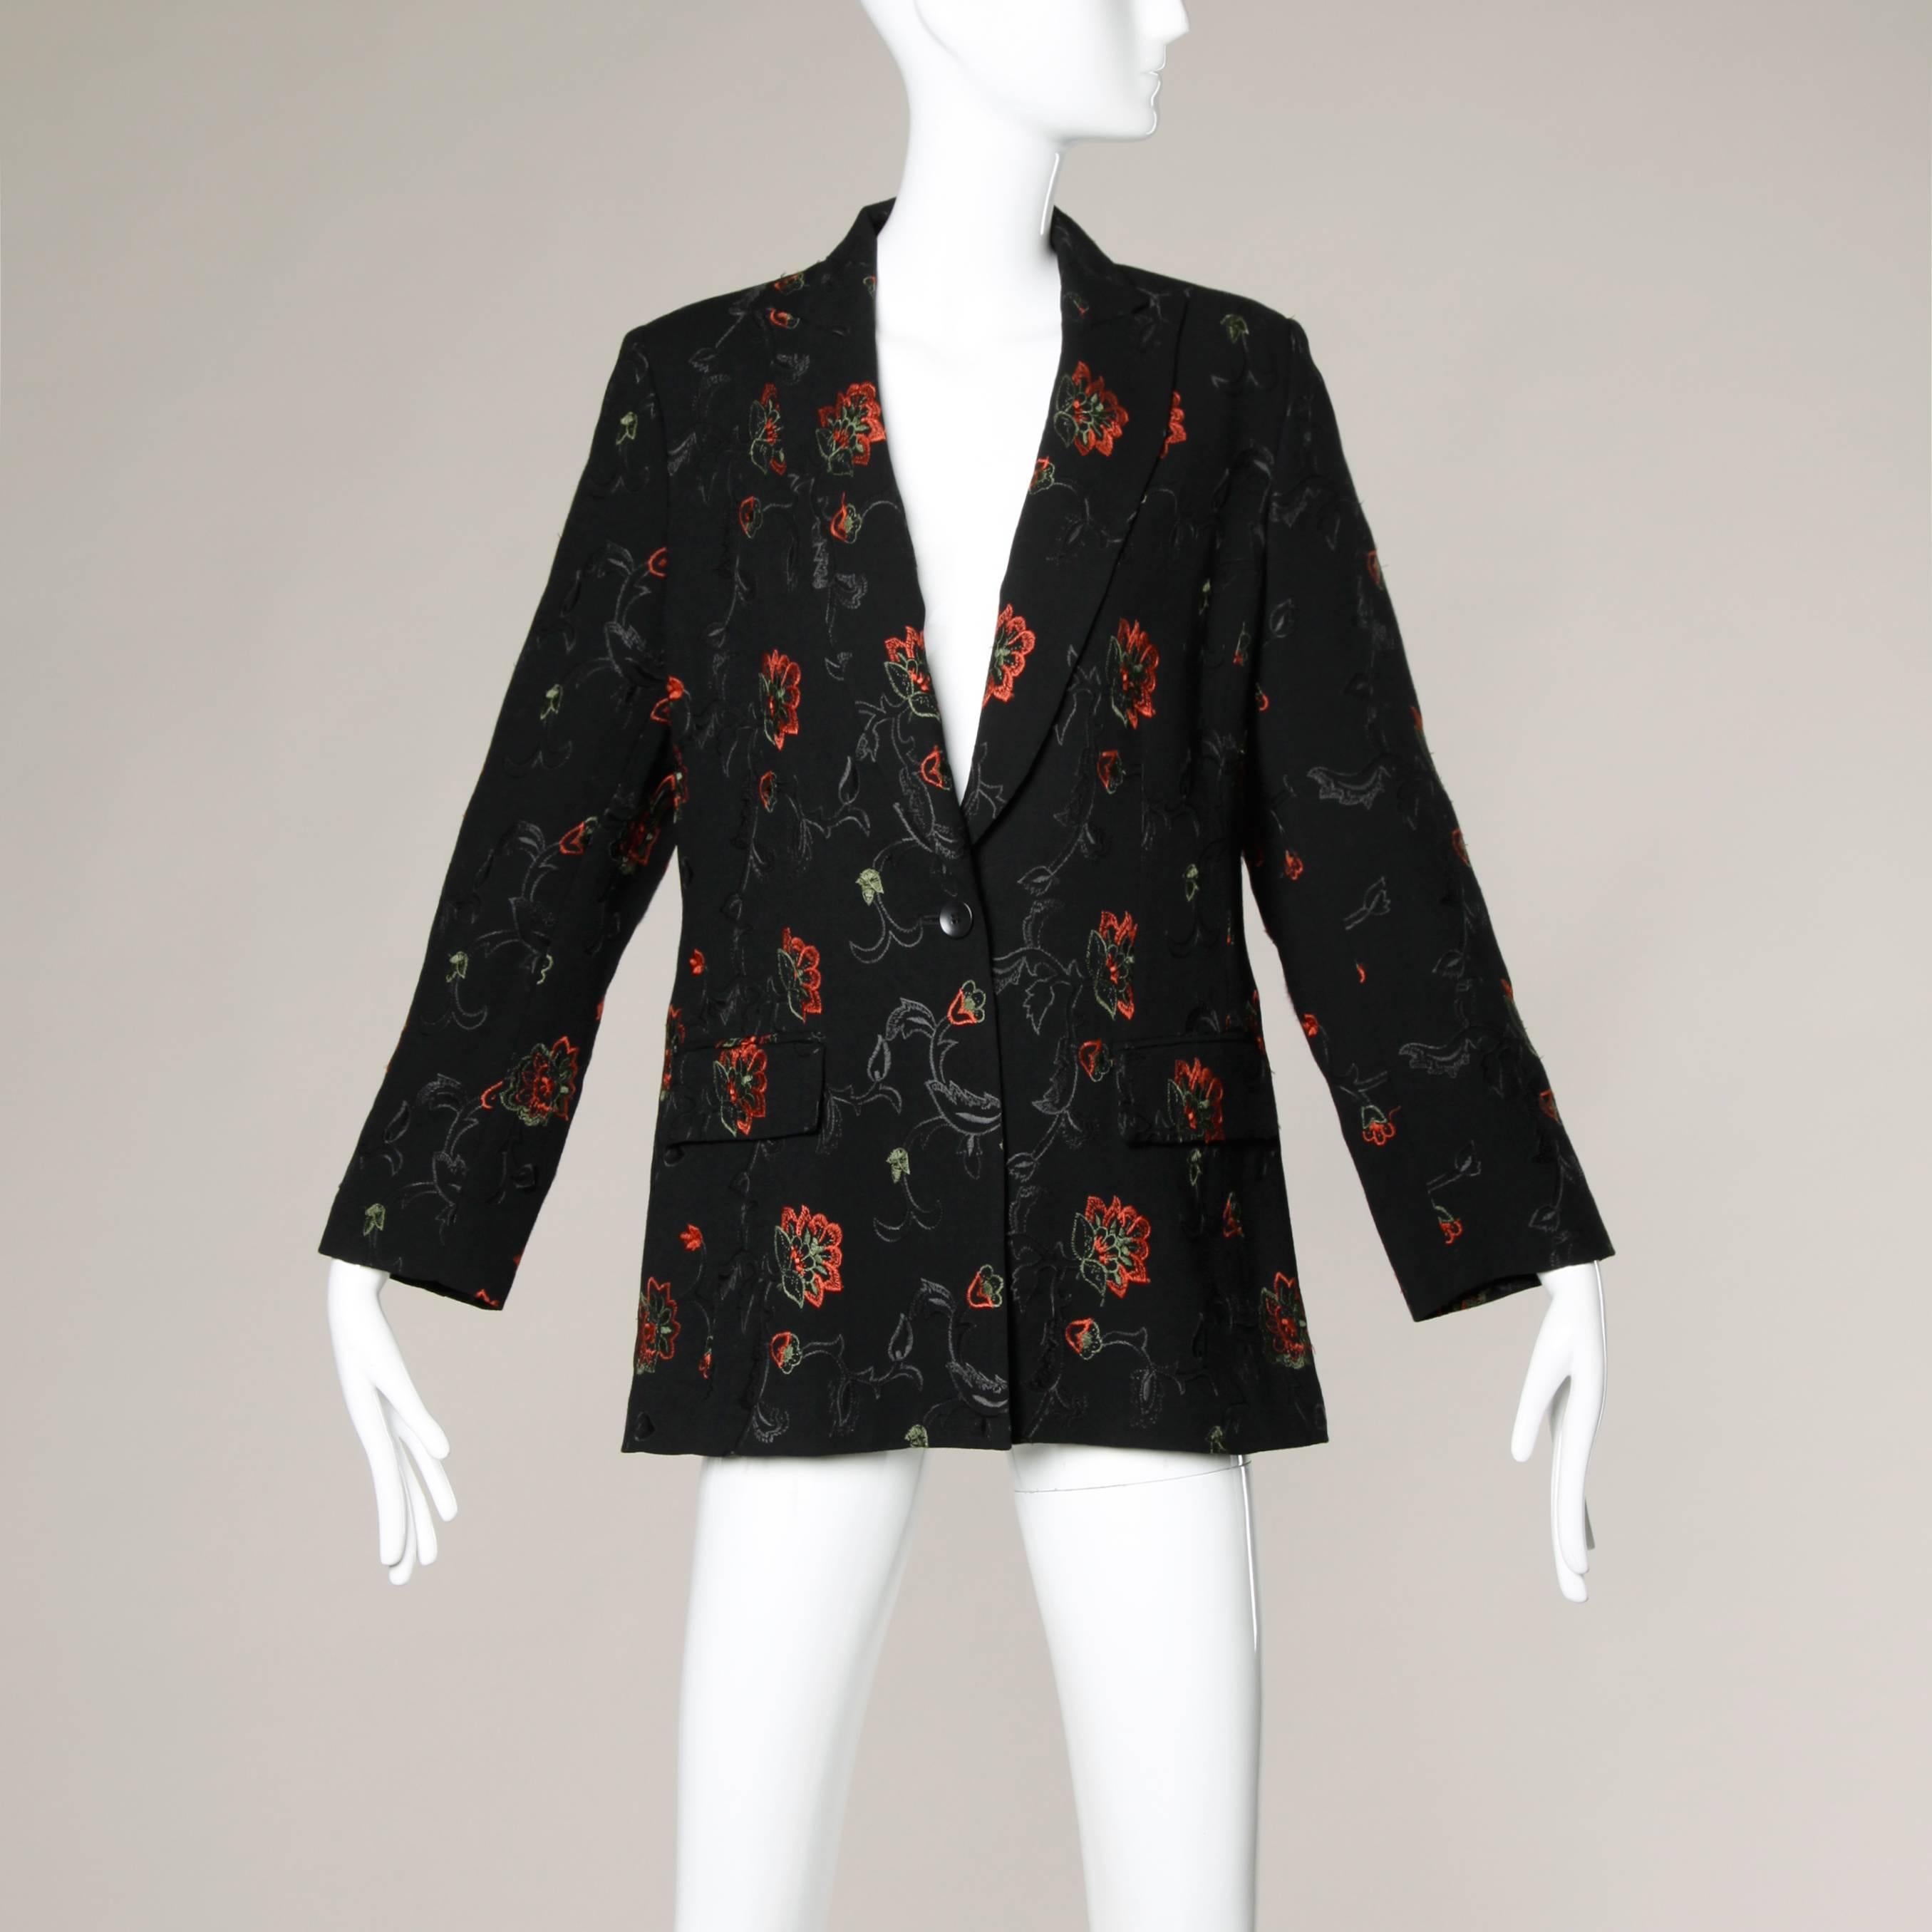 Women's Oscar de la Renta Wool Blazer Jacket with Floral Embroidery